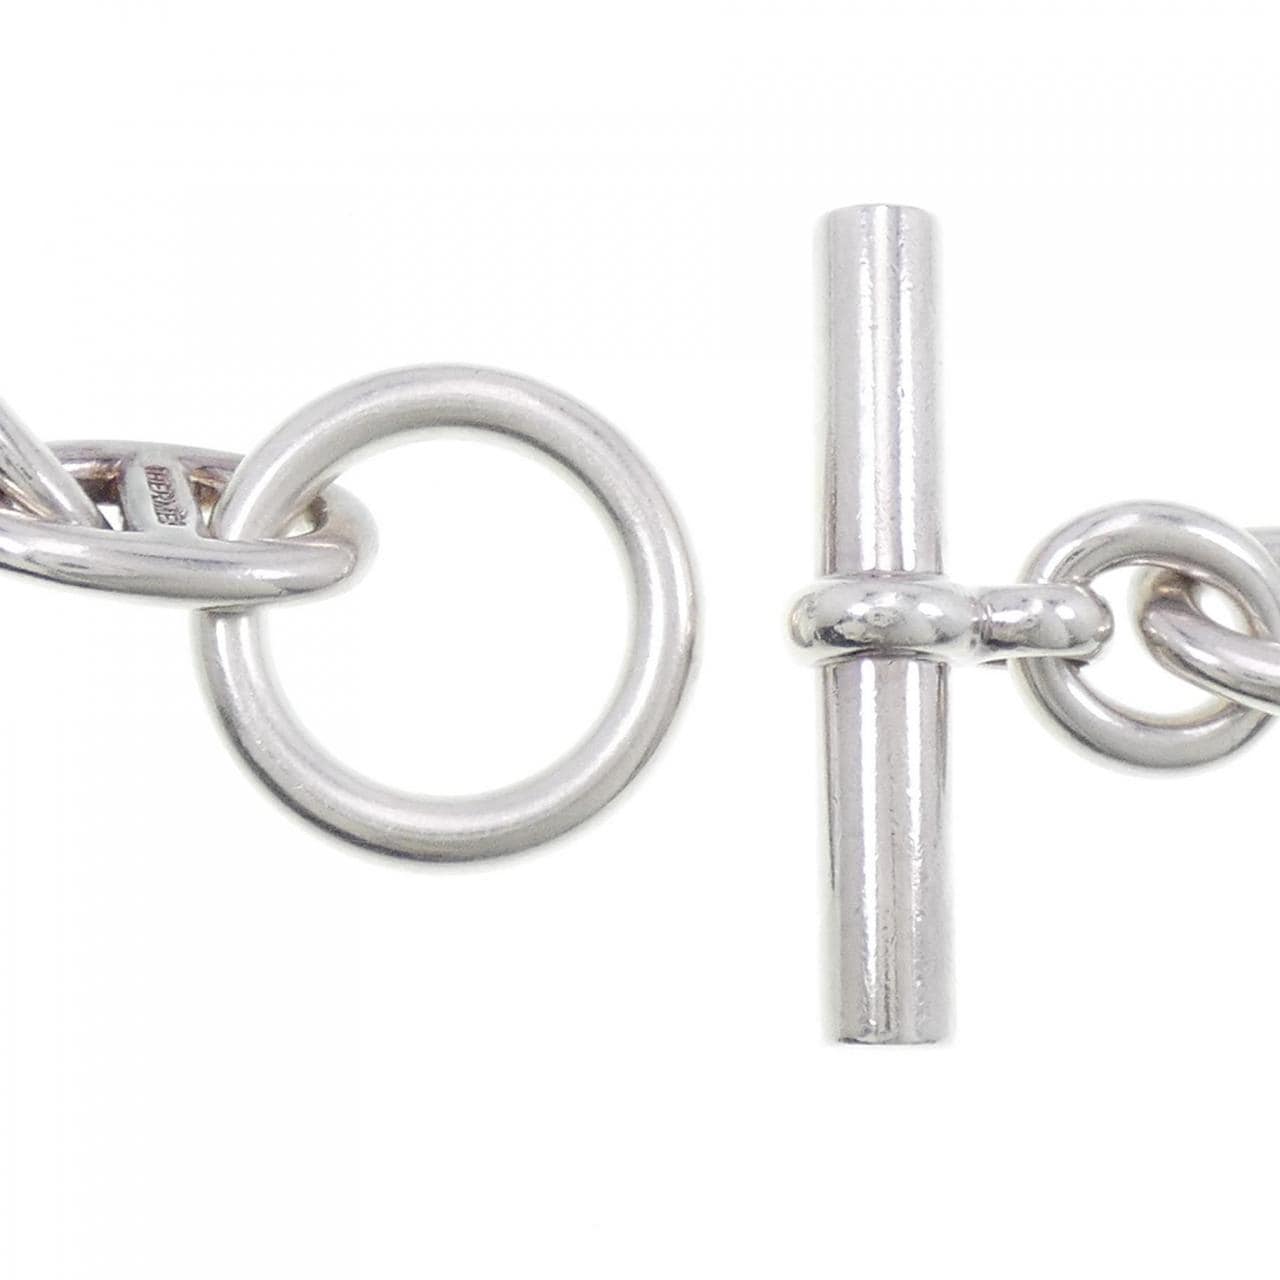 [vintage] HERMES Chaine d&#39;Ancre Large Model Necklace